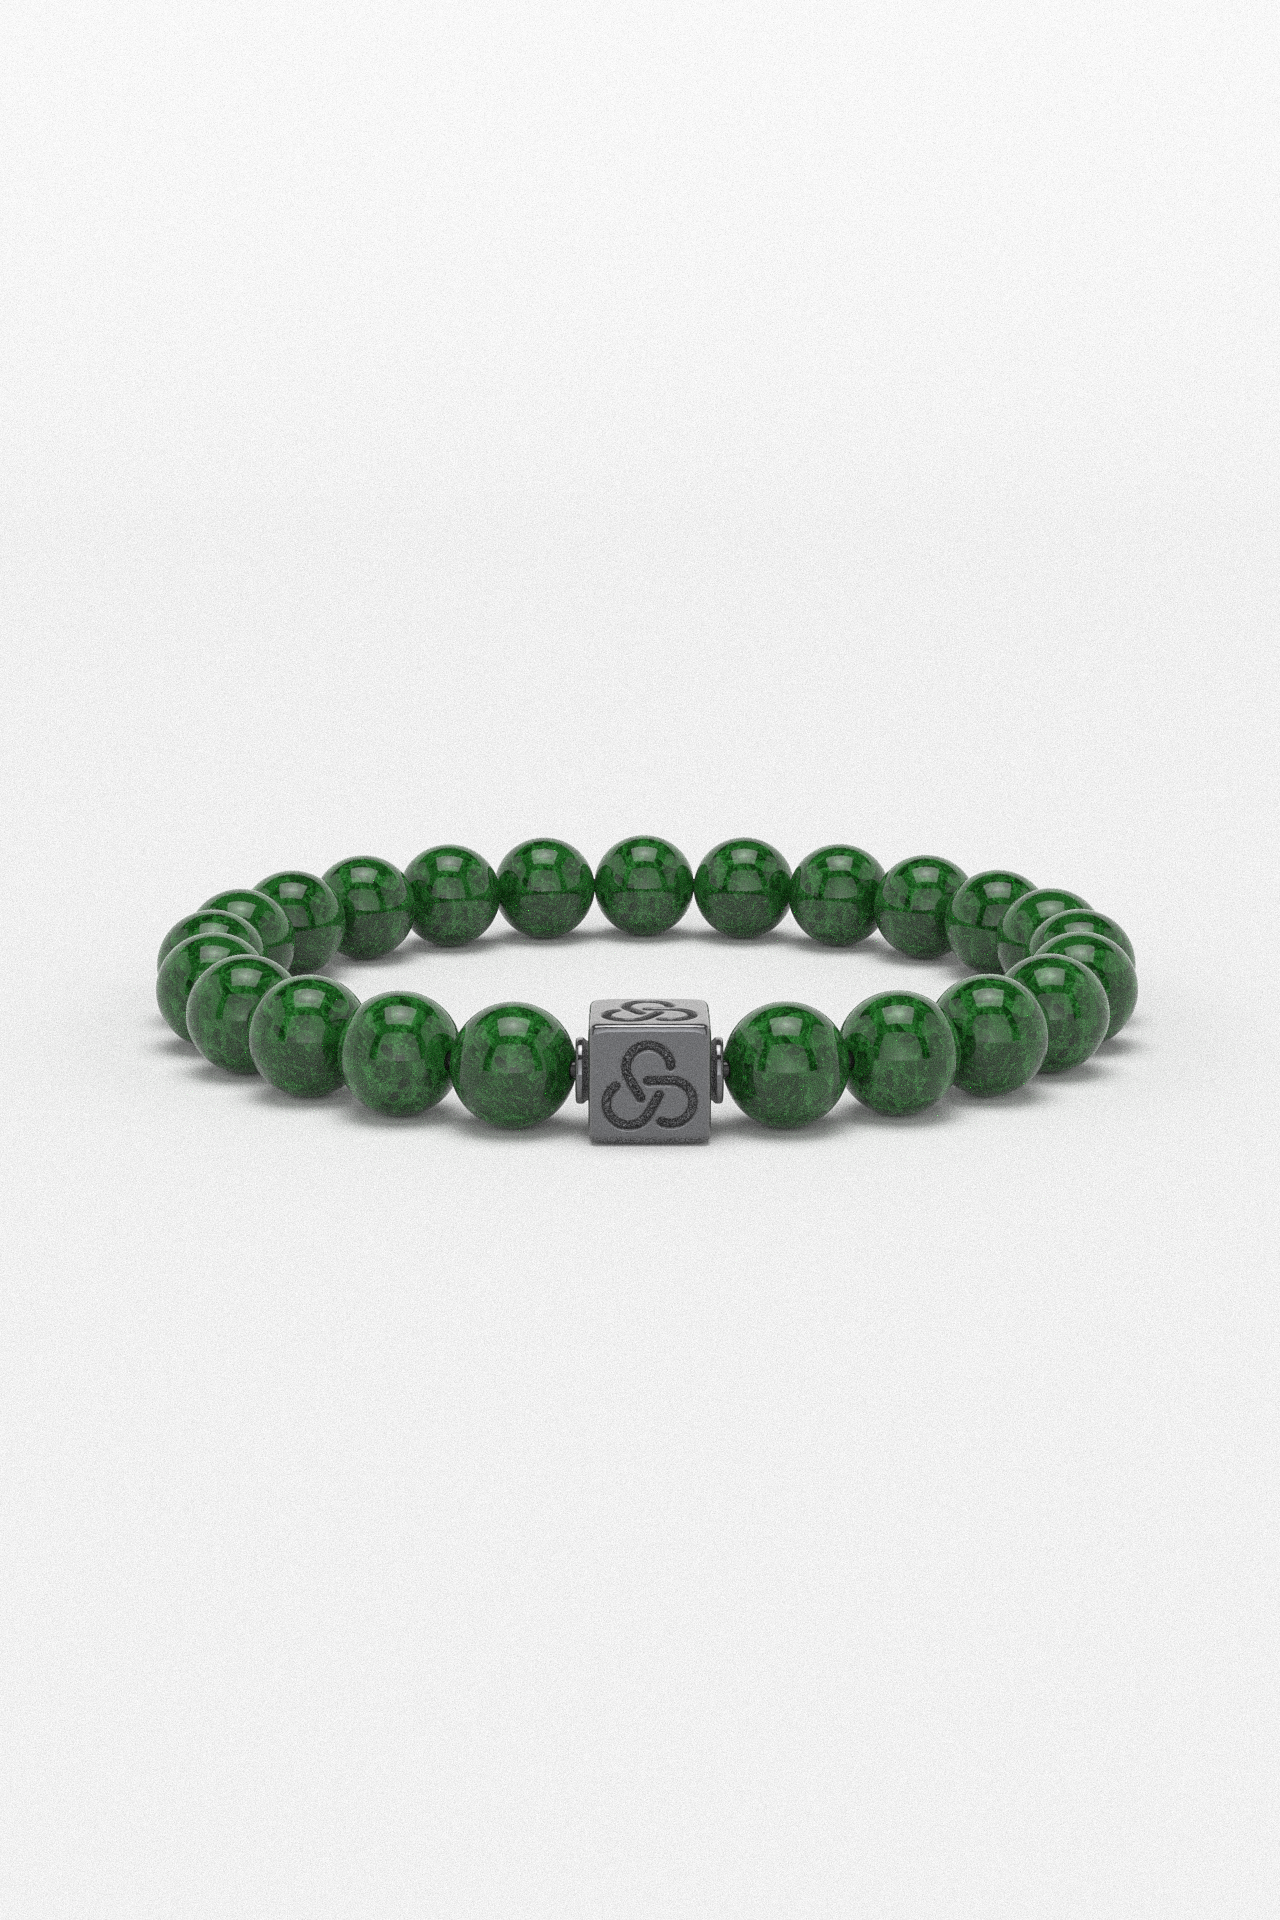 Emerald Jade Bracelet 8mm | Essential